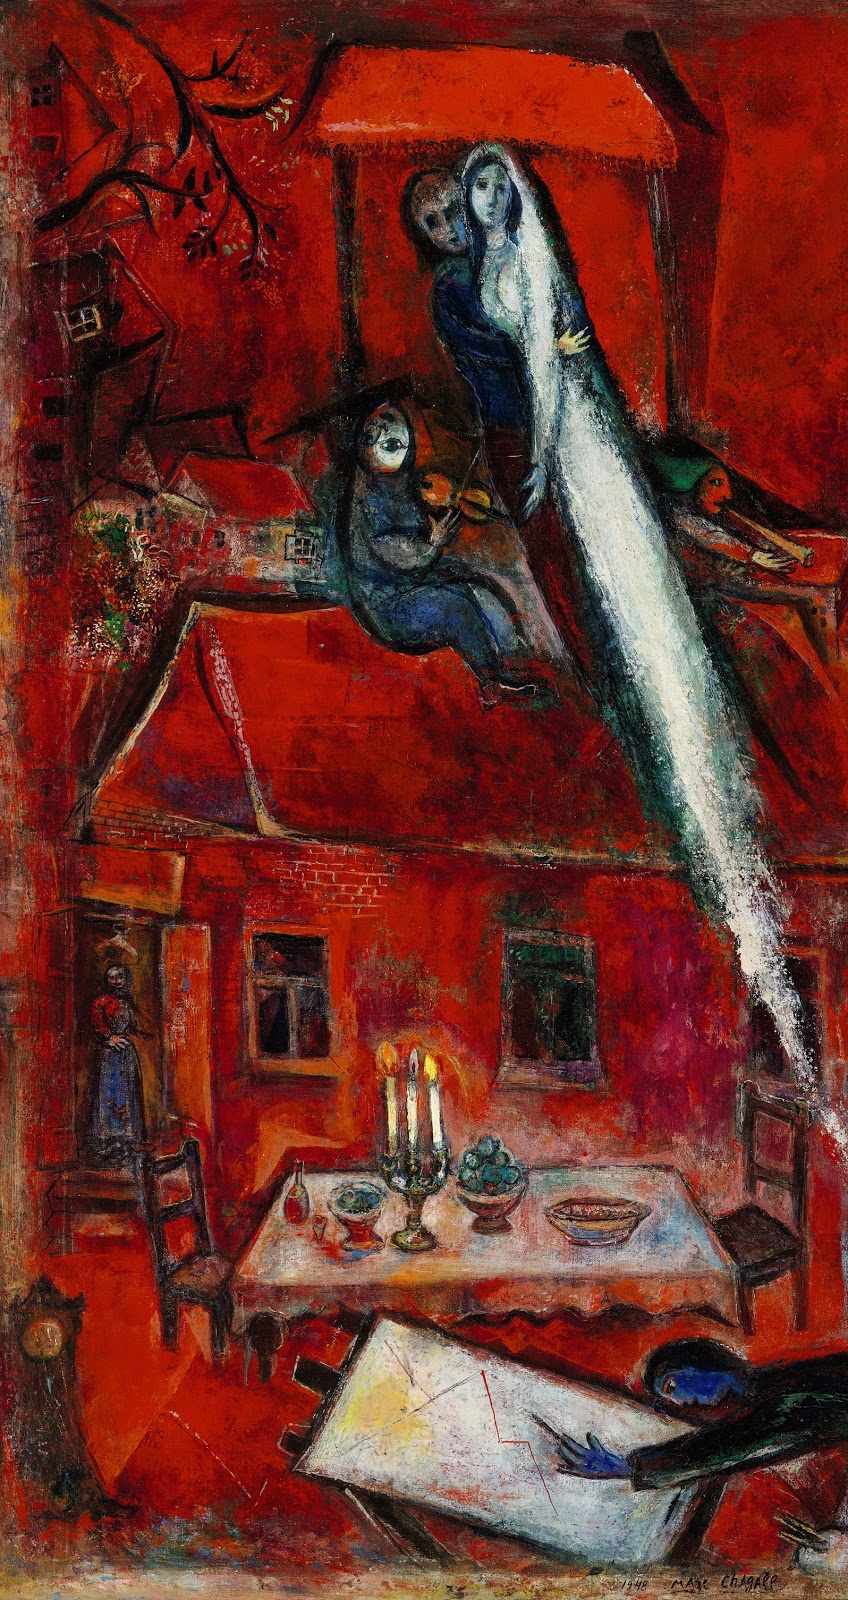 Marc+Chagall-1887-1985 (381).jpg